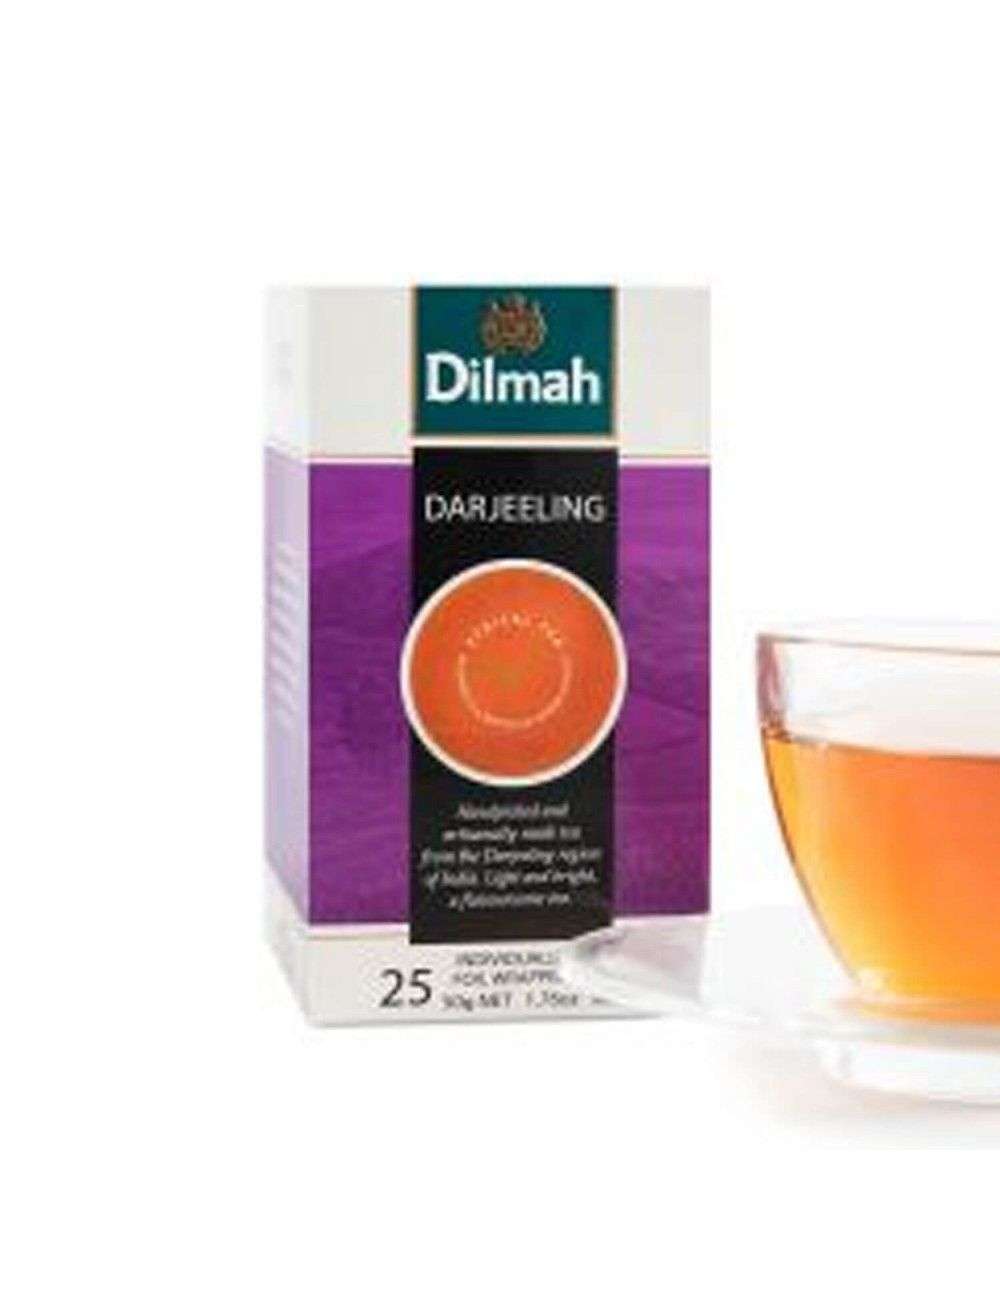 Tè Nero della regione Darjeeling Dilmah 25 bustine